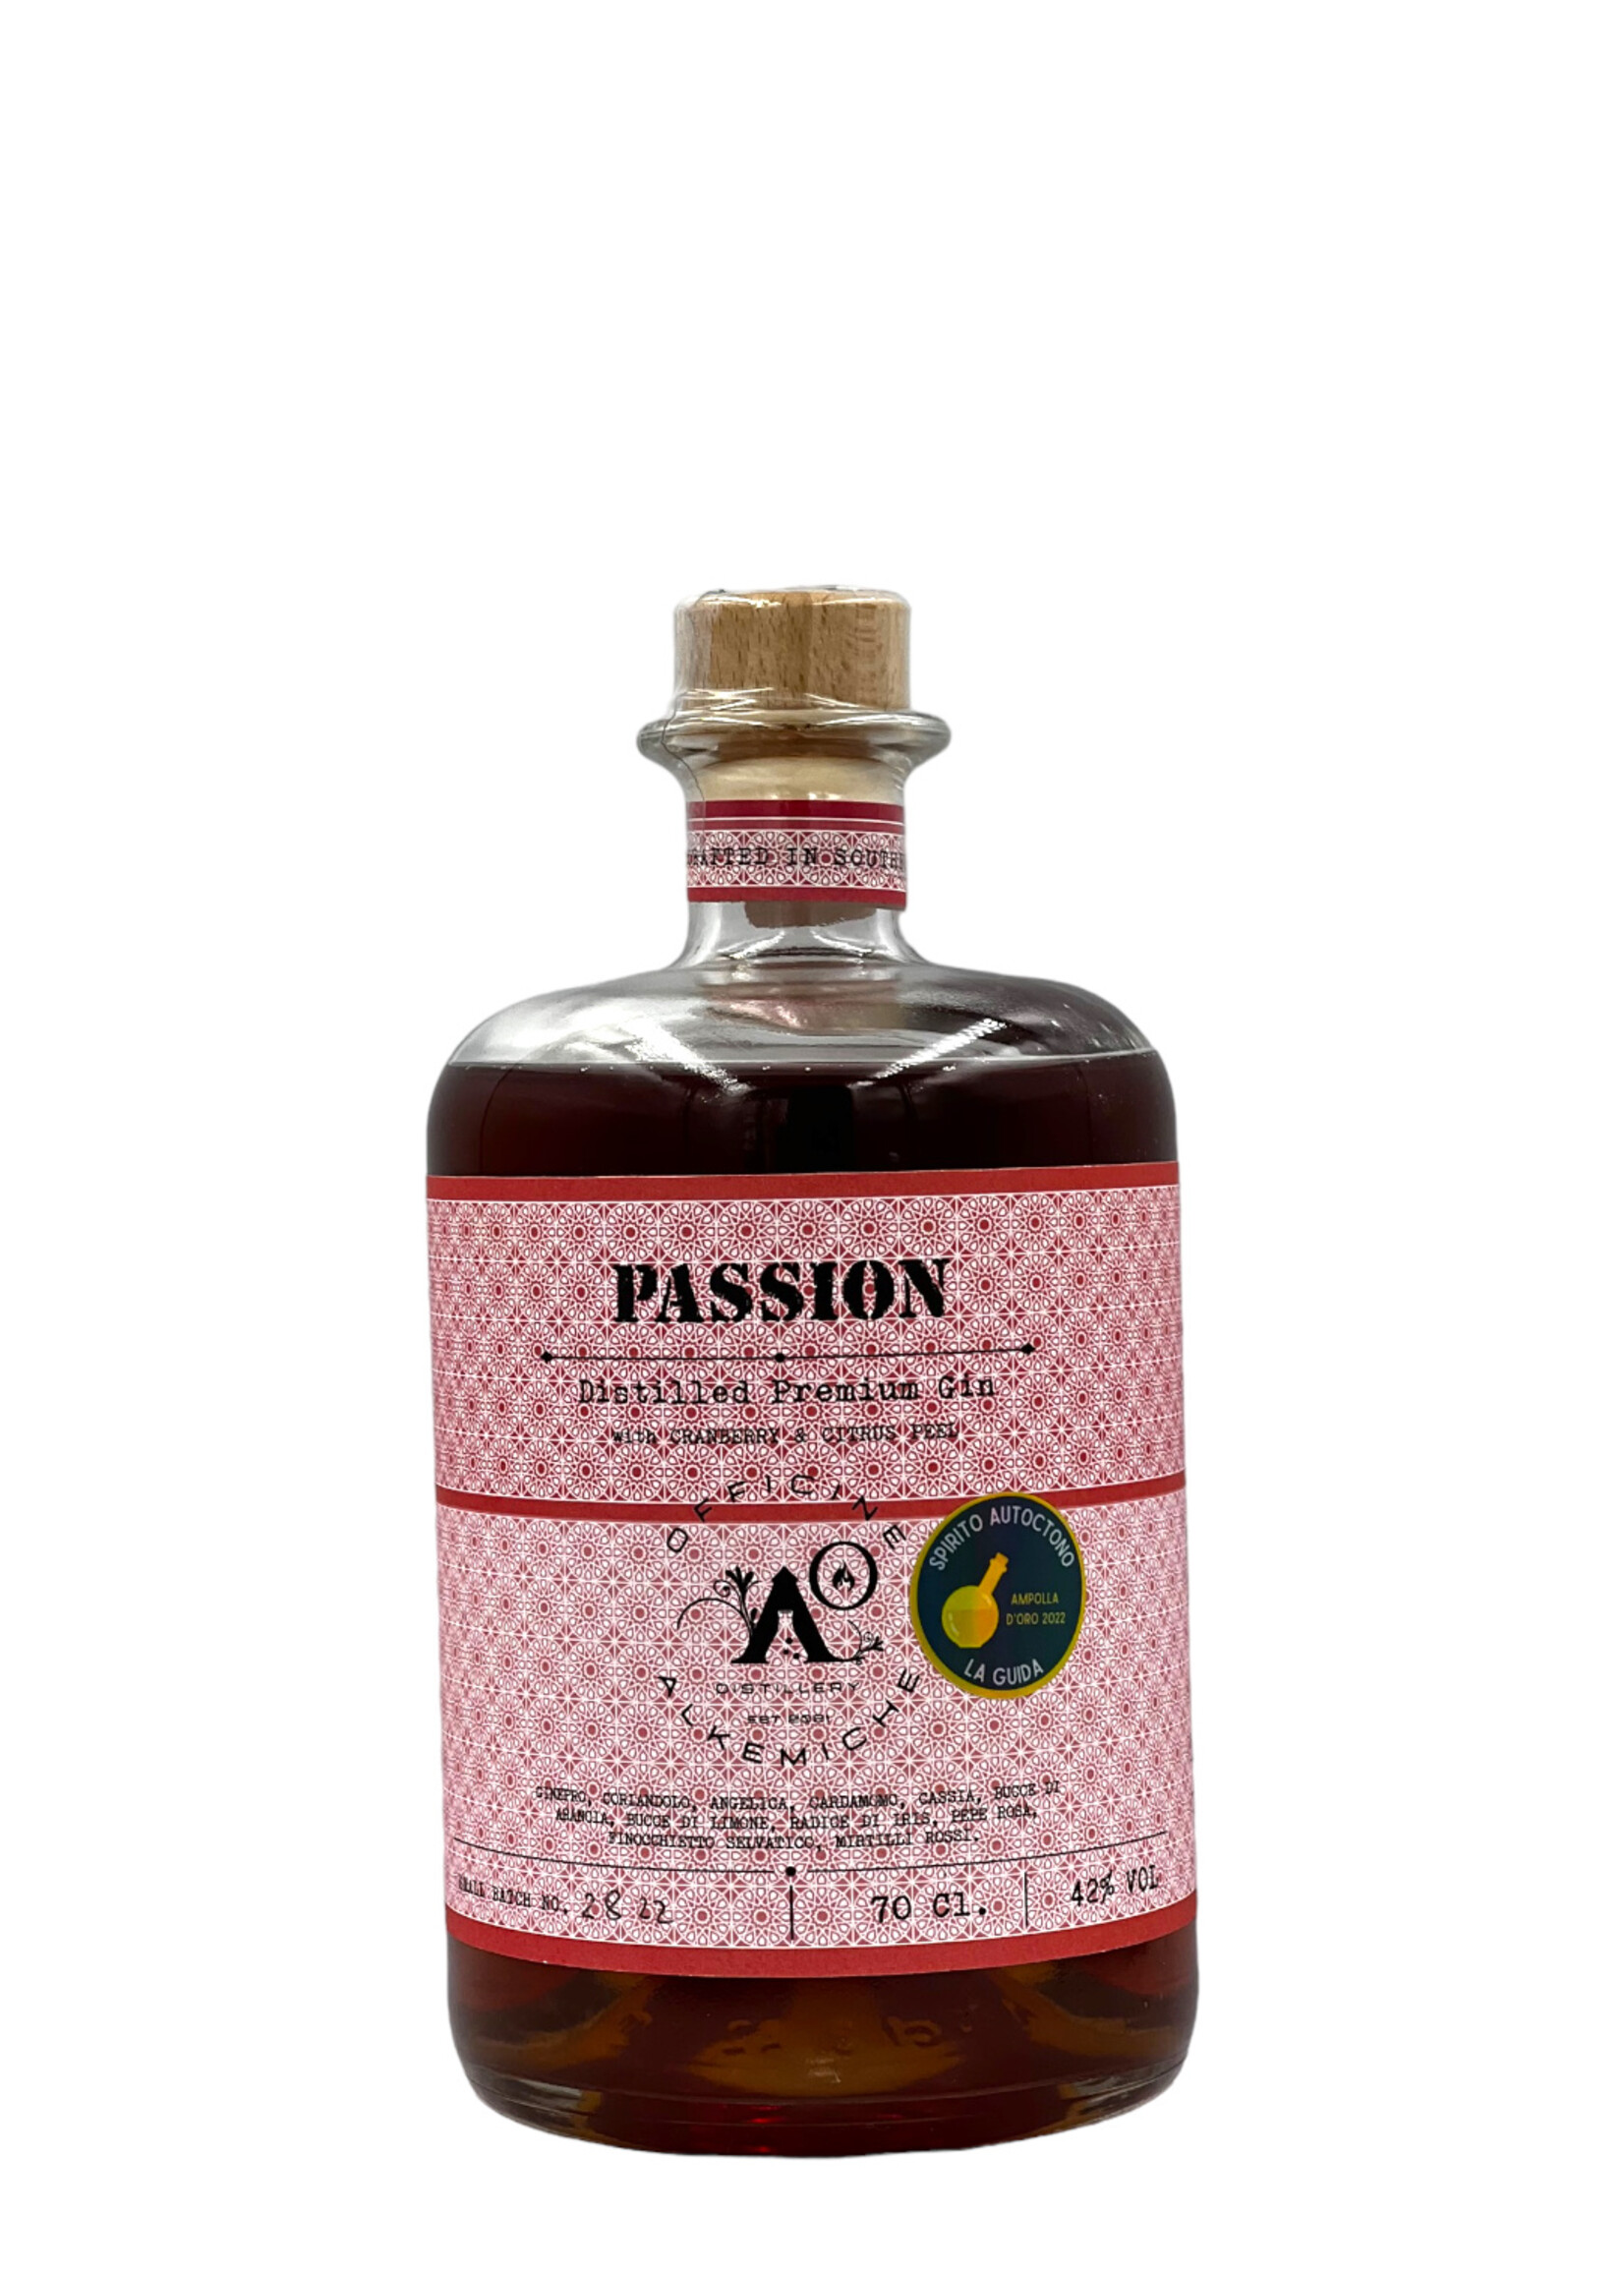 Officine Alkemiche Passion Distilled Premium Gin 42% vol., 70cl, - Officine Alkemiche